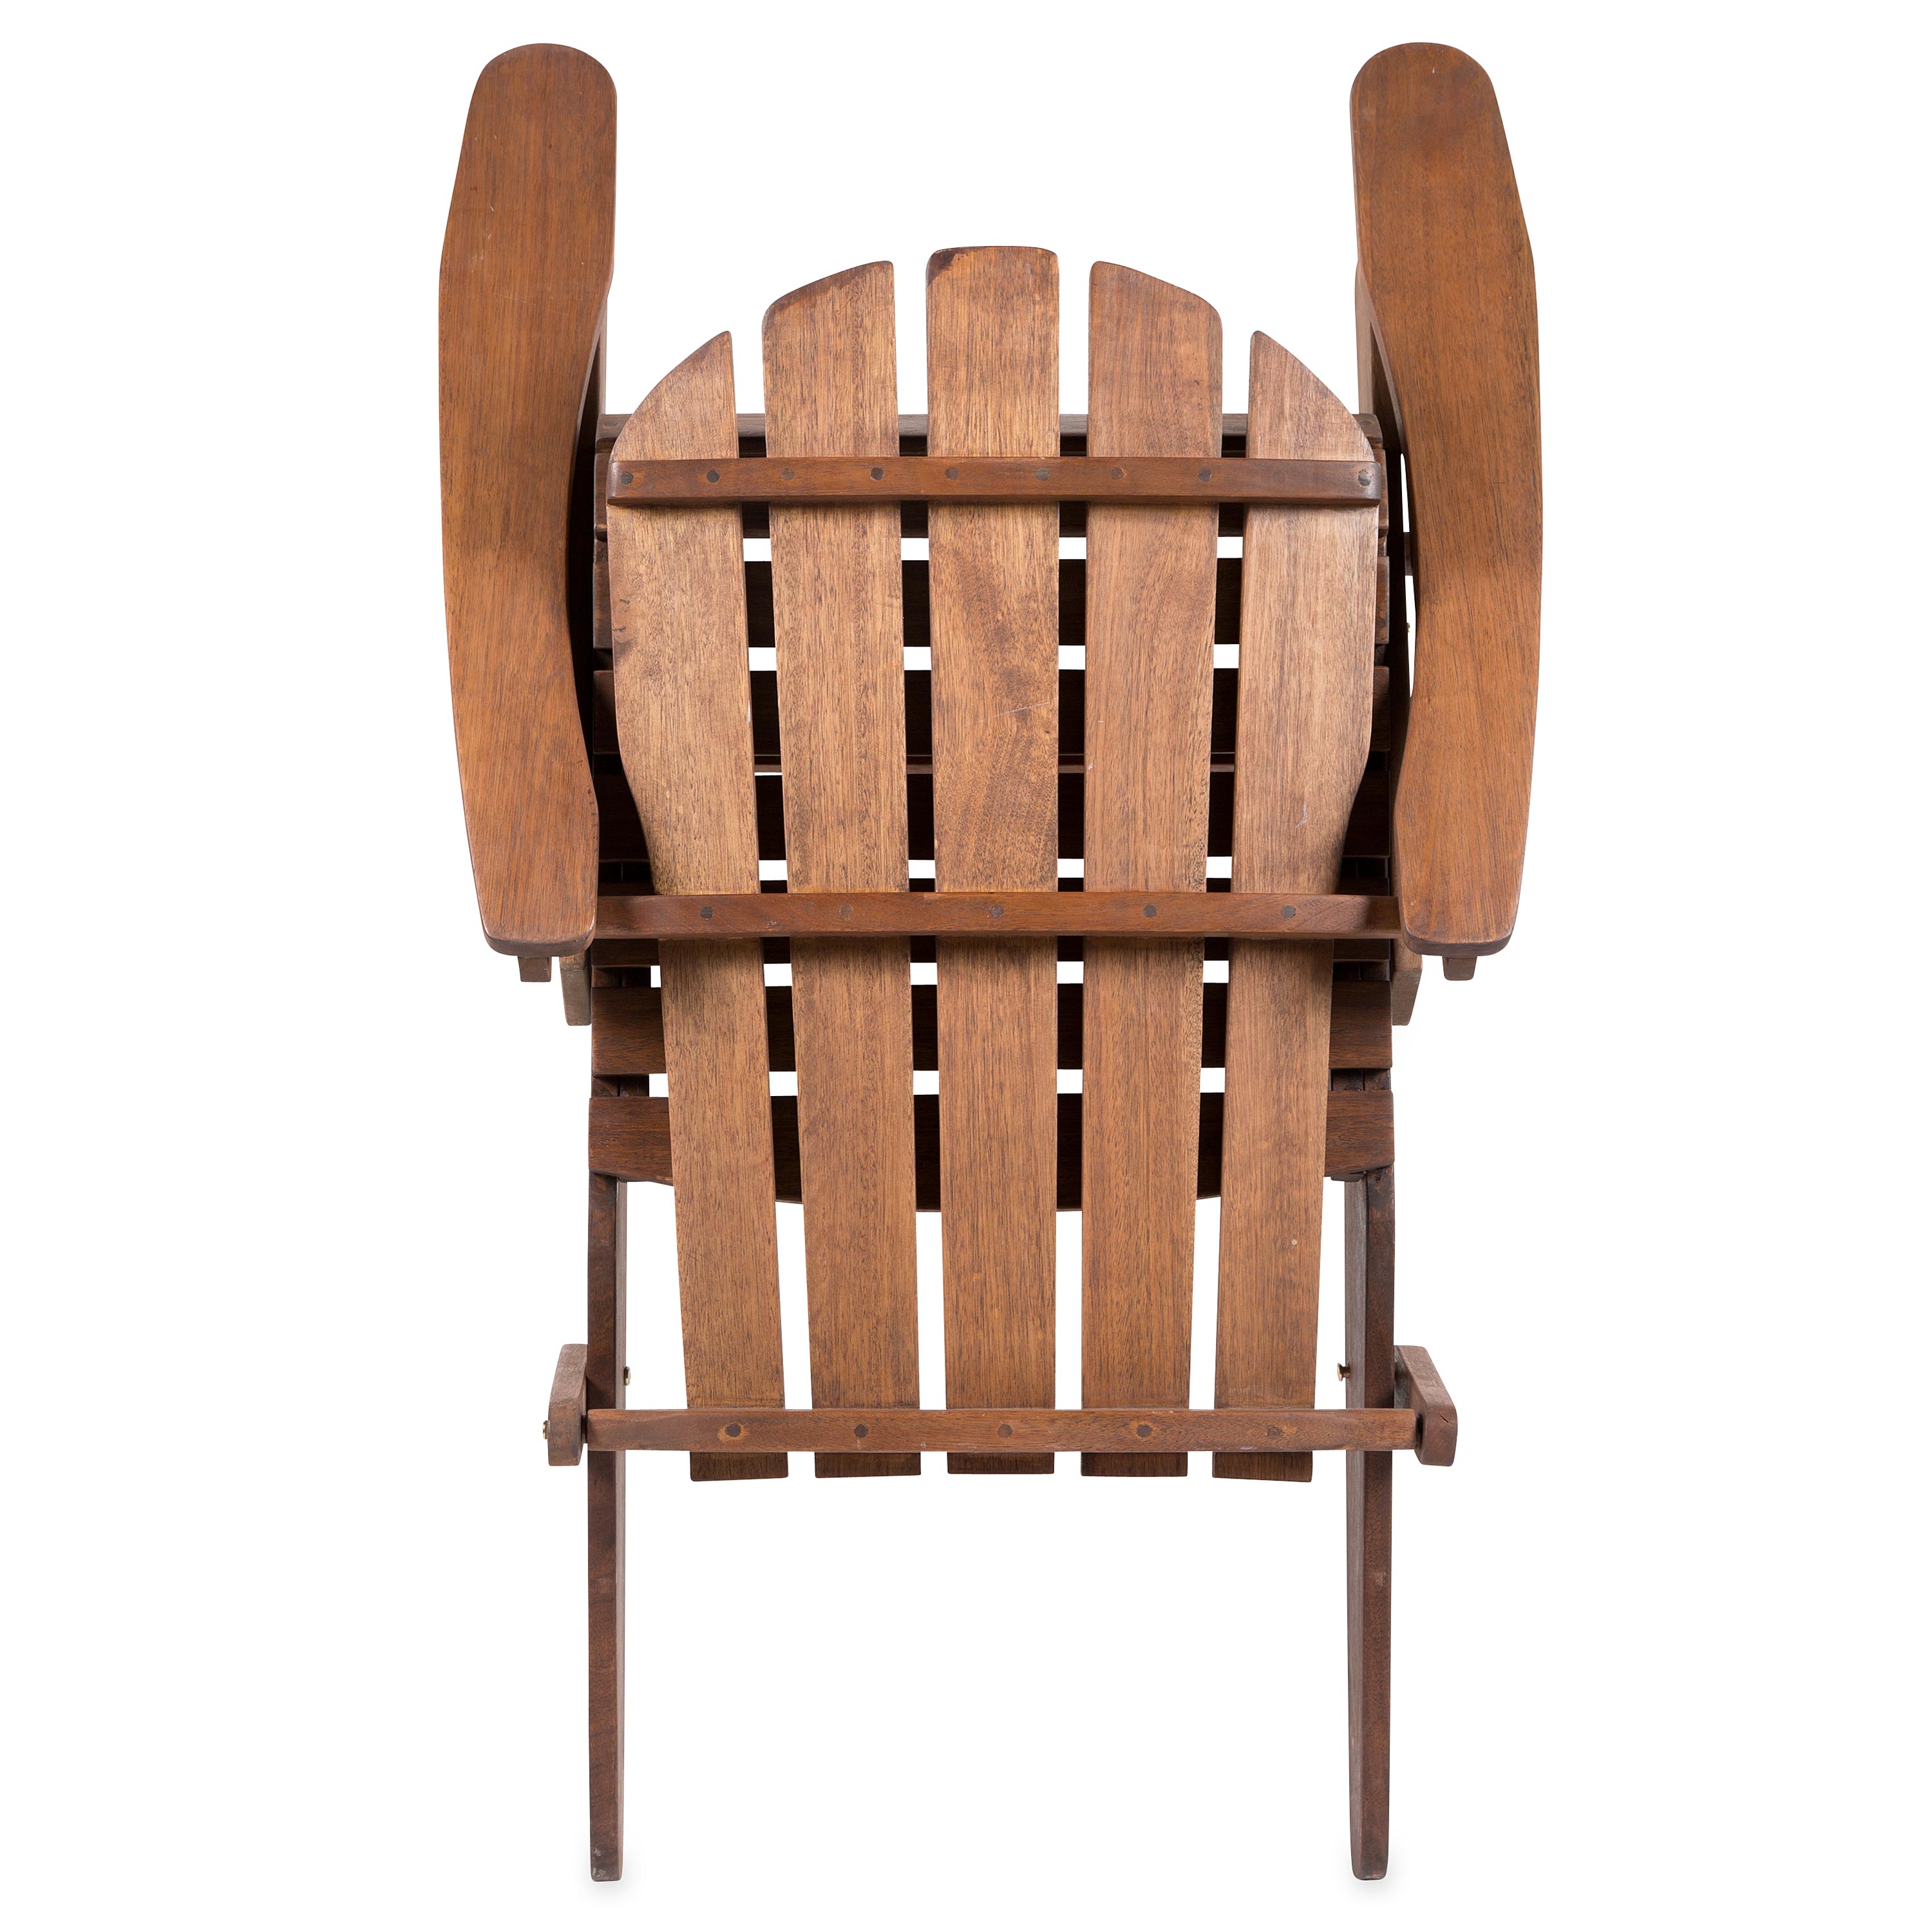 Eucalyptus Wood Adirondack Chair